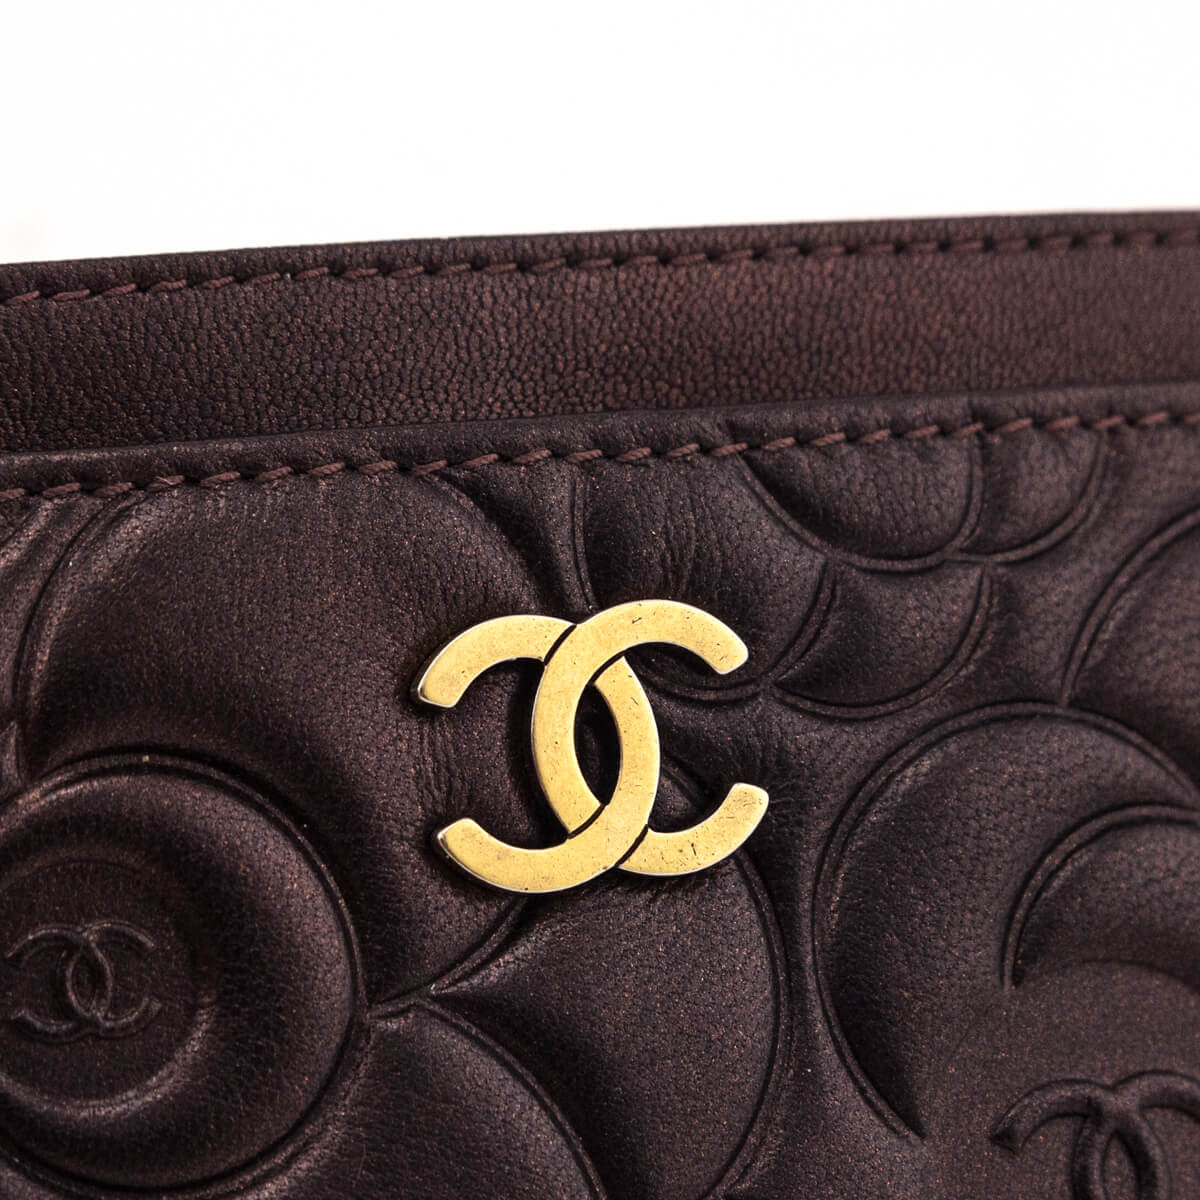 Chanel Metallic Dark Brown Camellia Embossed Lambskin Card Holder - Love that Bag etc - Preowned Authentic Designer Handbags & Preloved Fashions